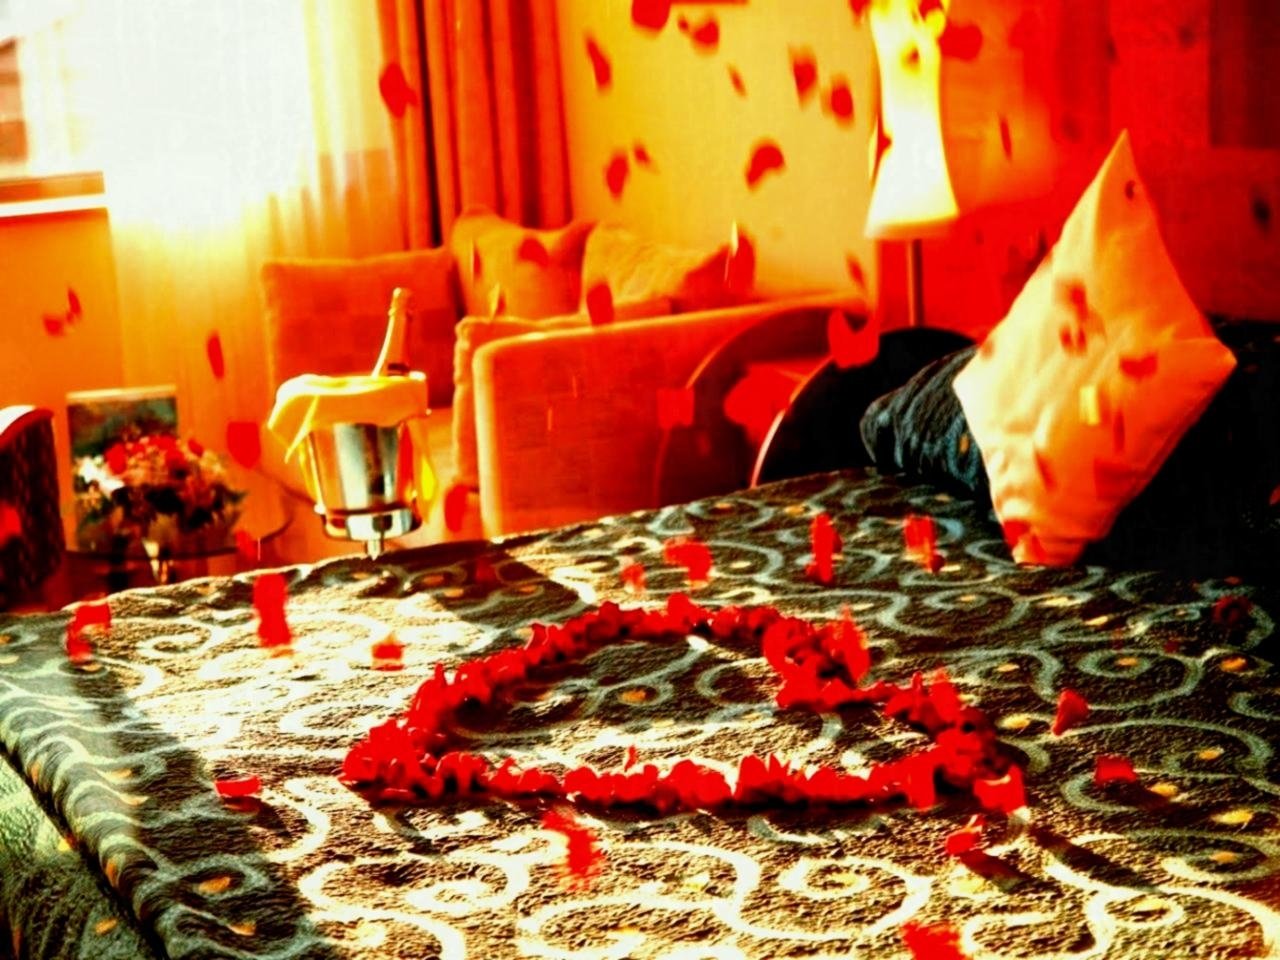 10 Lovable Romantic Hotel Ideas For Him romantic room decoration hotel ideas for him dfbd tikspor cozy 2022